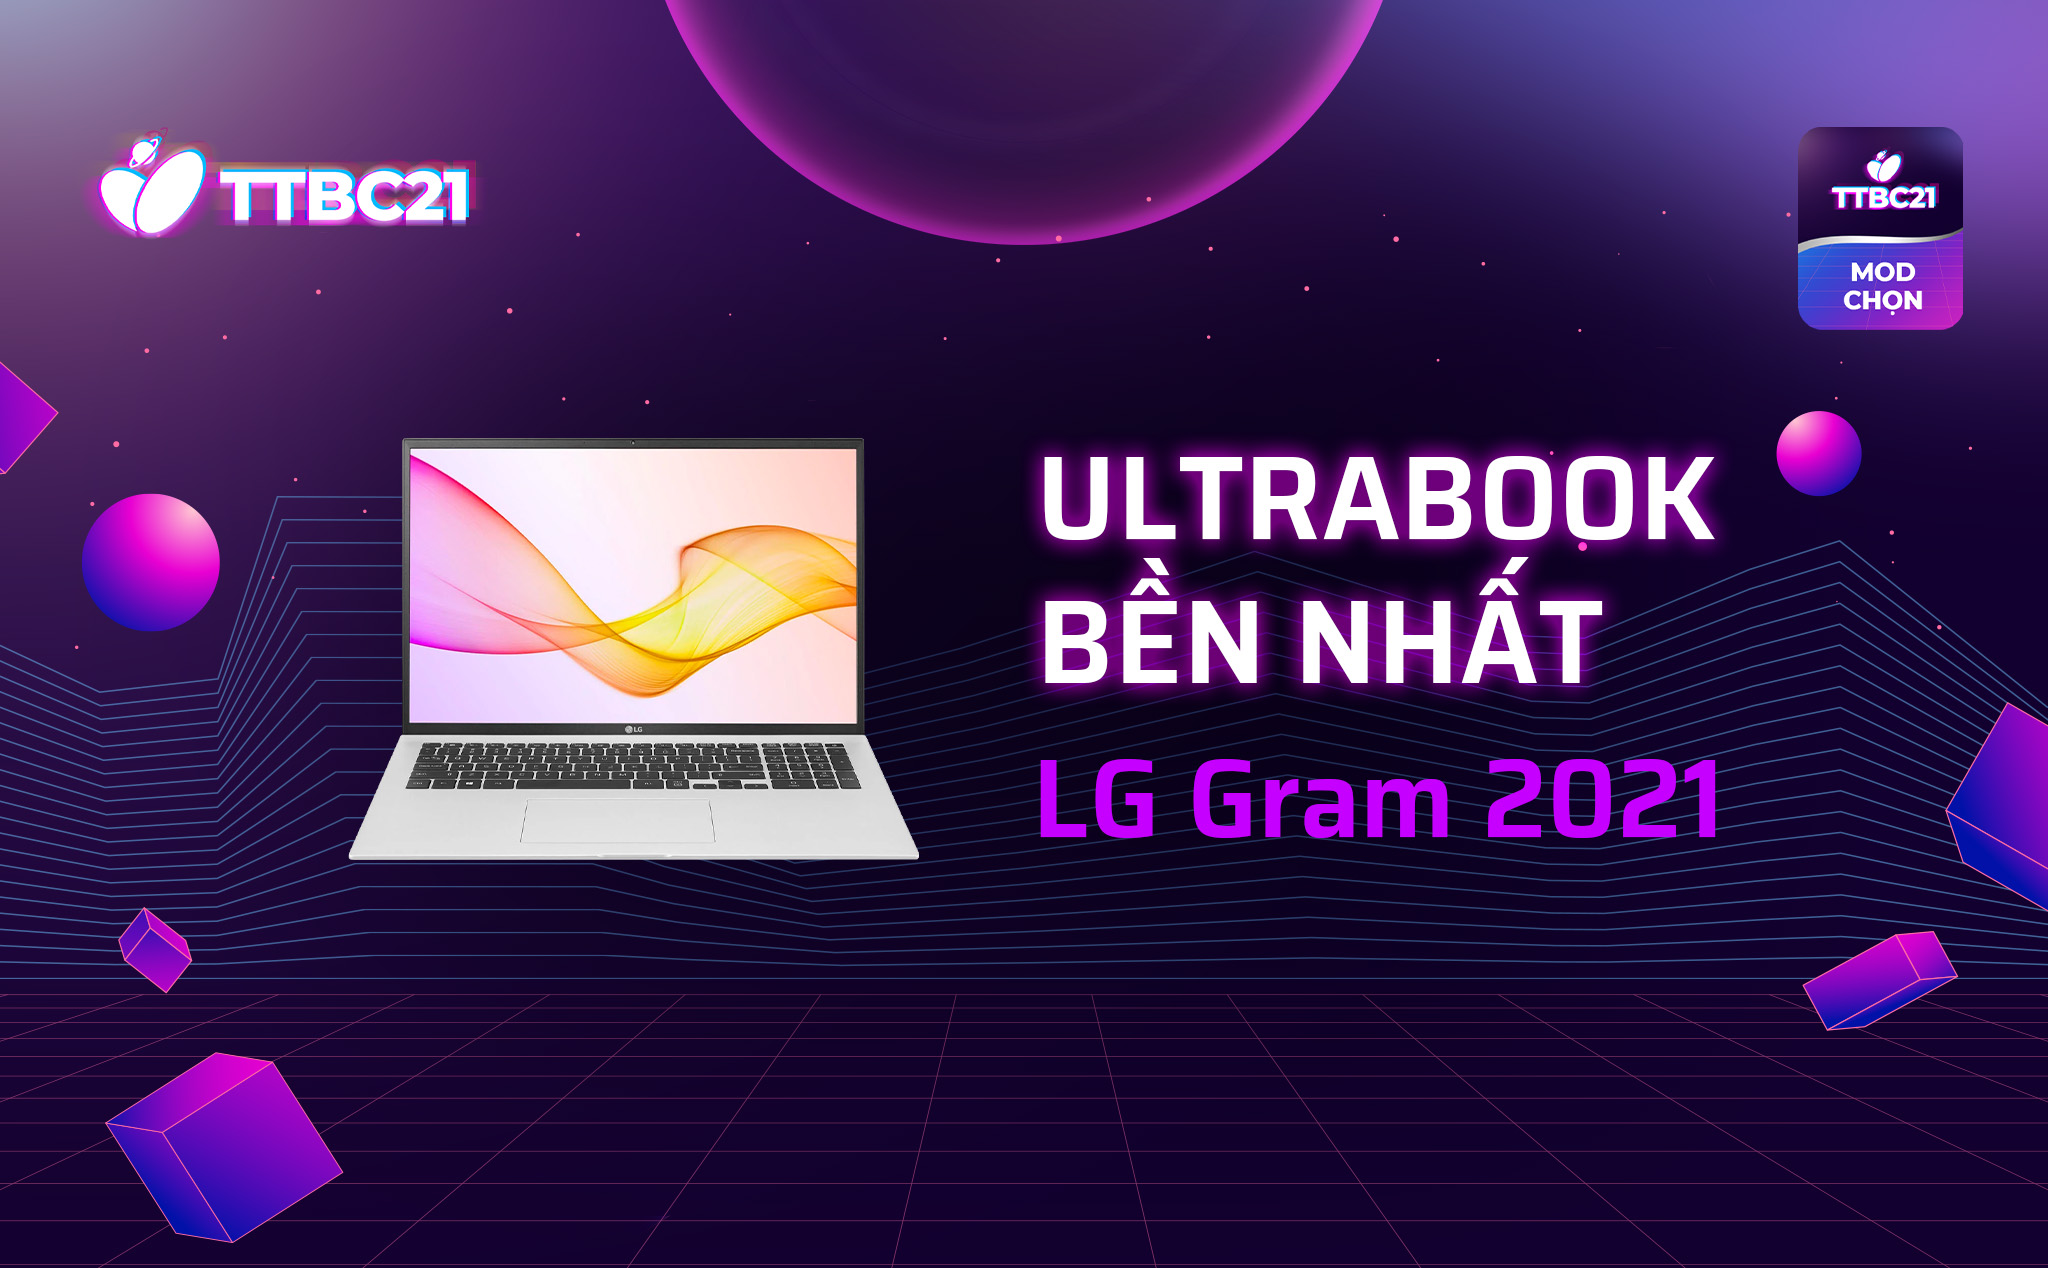 TTBC21 - Mod Choice: Ultrabook bền nhất - LG gram 2021